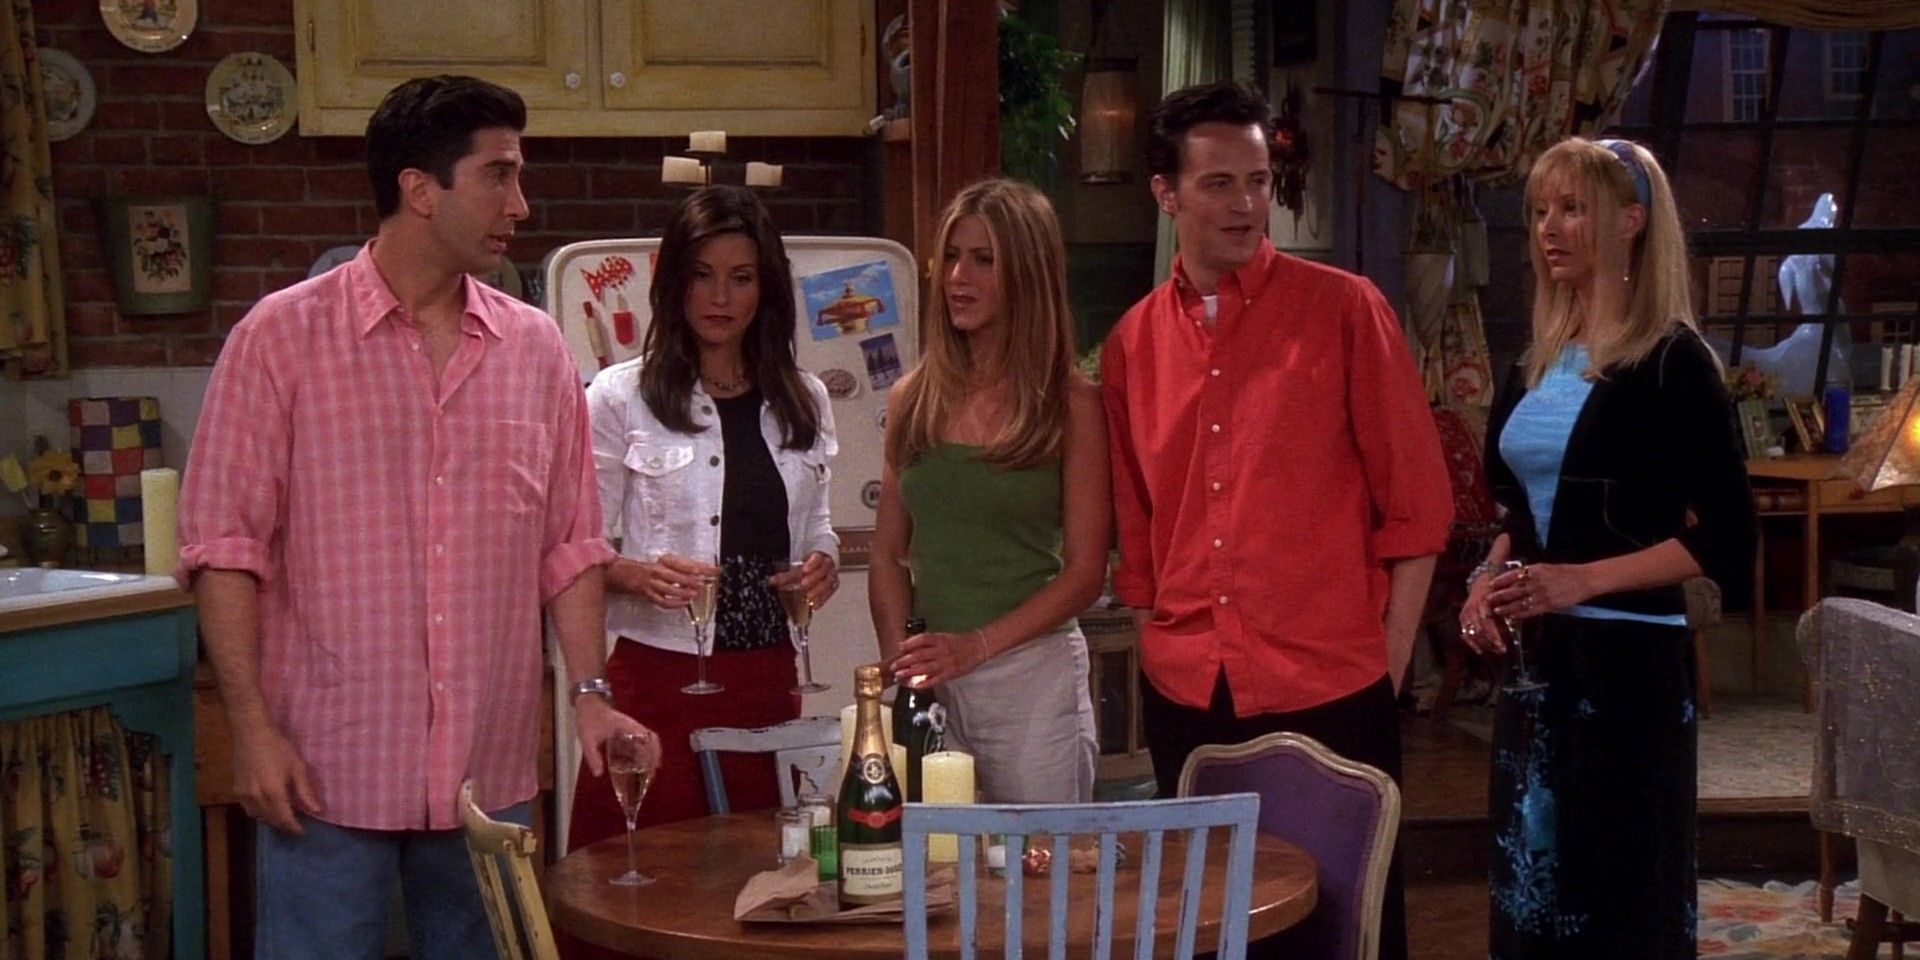 The Friends in Monica's kitchen